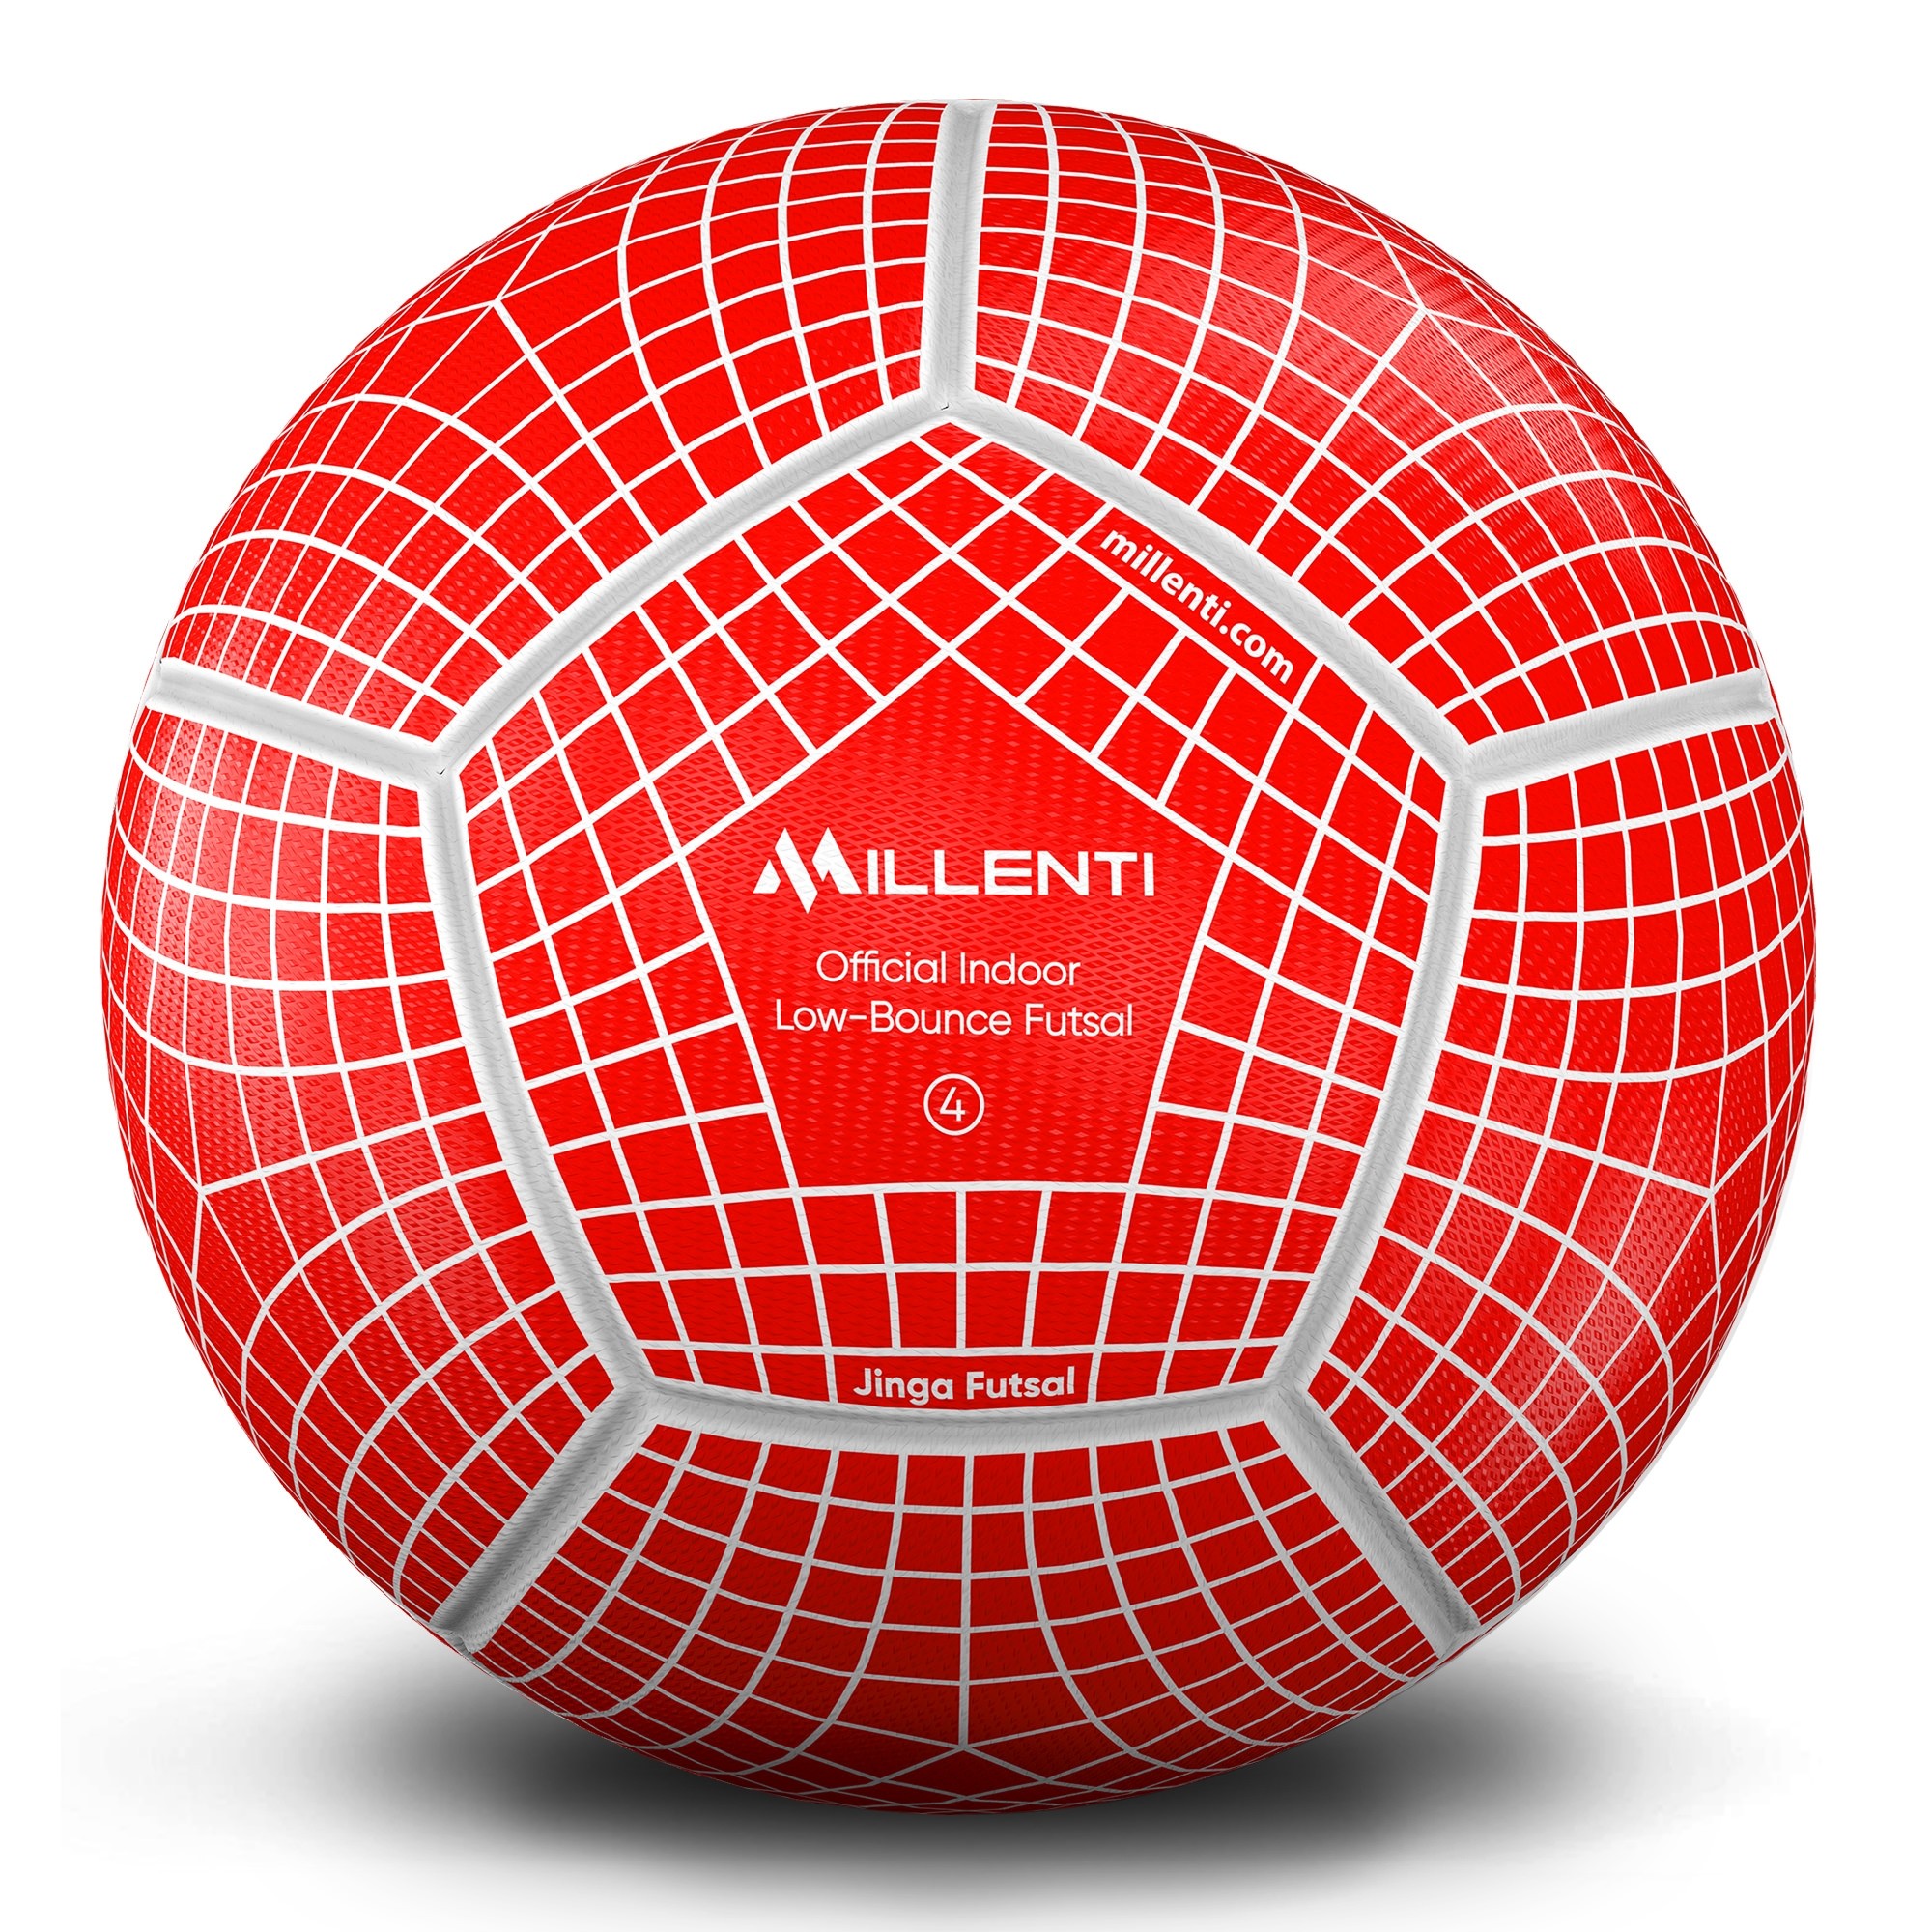 Millenti Futsal Indoor Soccer Ball - Low Bounce Futsal SoccerBall Official Size 4, Salsa Red, SB0704RD